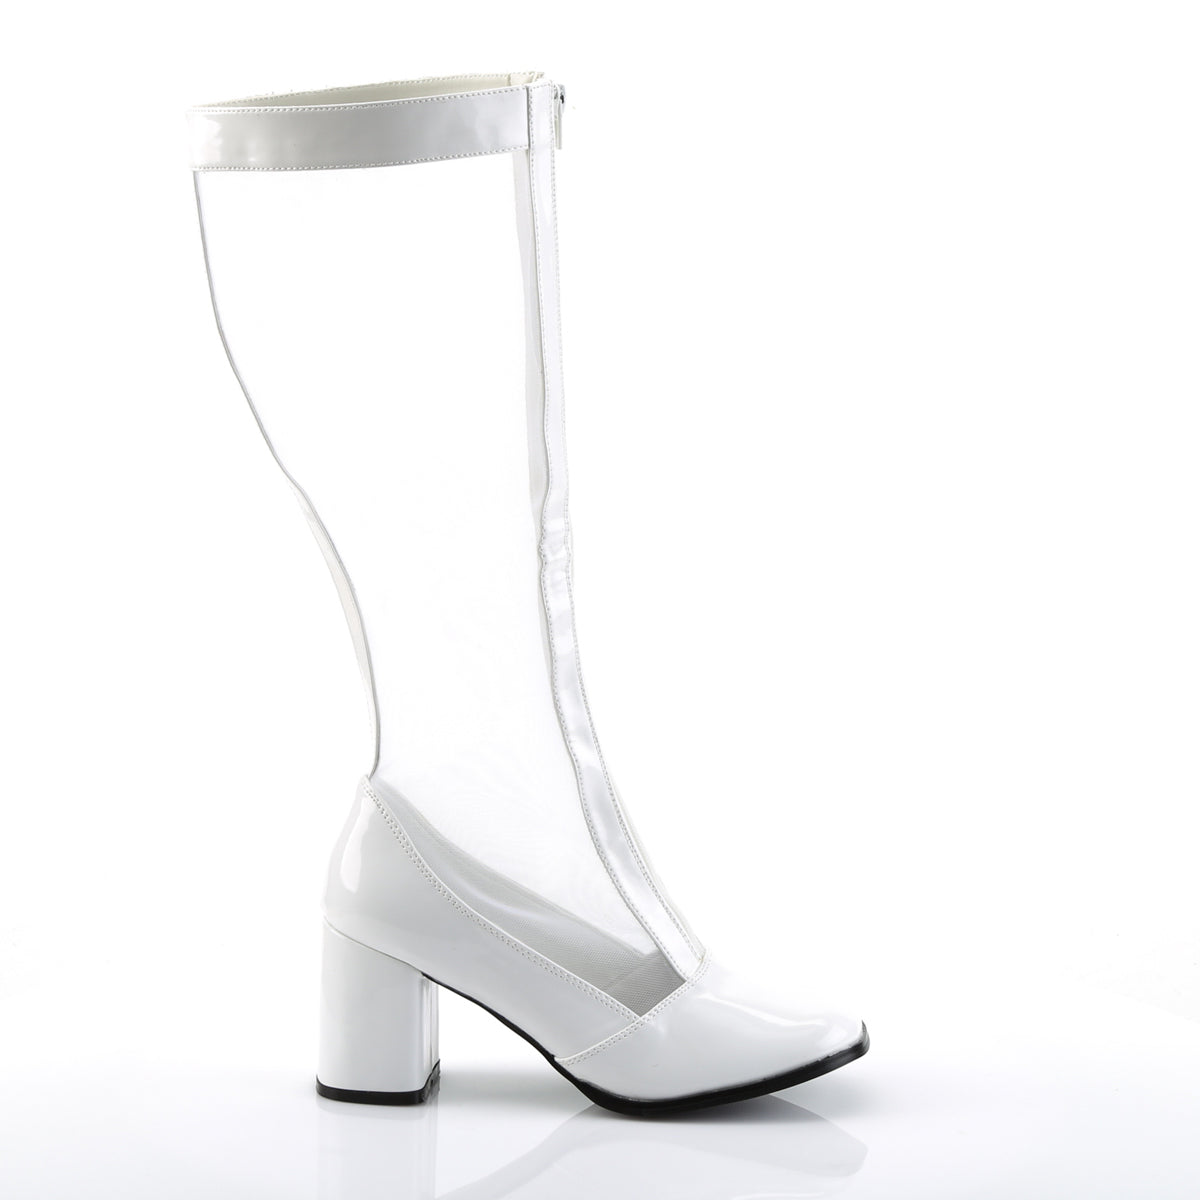 GOGO-307 3 Inch Heel White Women's Boots Funtasma Costume Shoes Fancy Dress